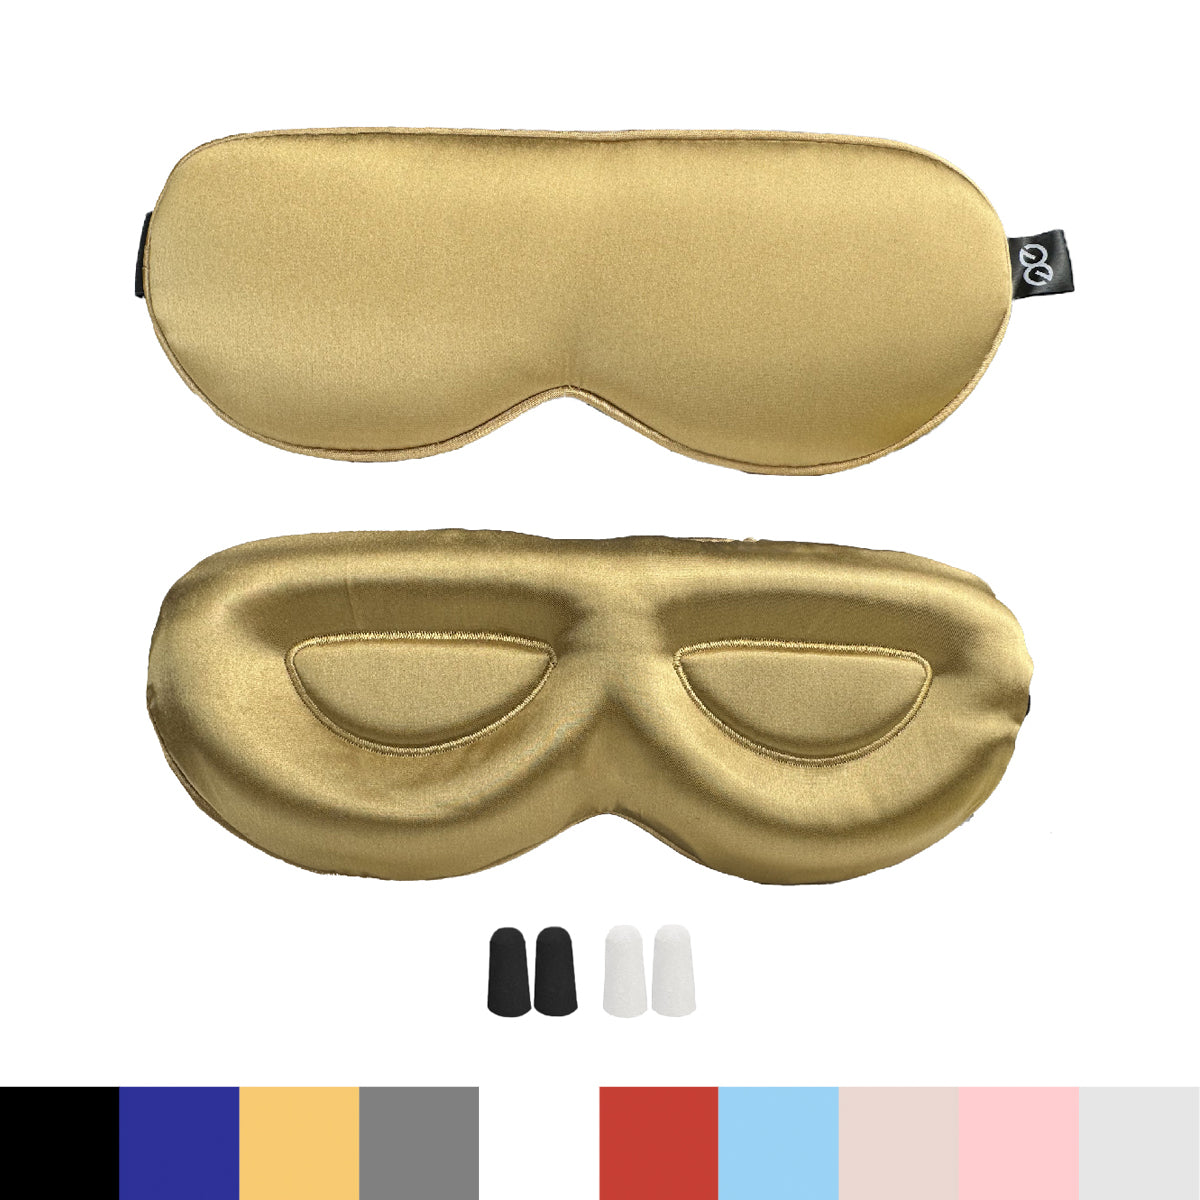 23MM Mulberry Silk 3D Eye Mask with Sleeping Earplugs